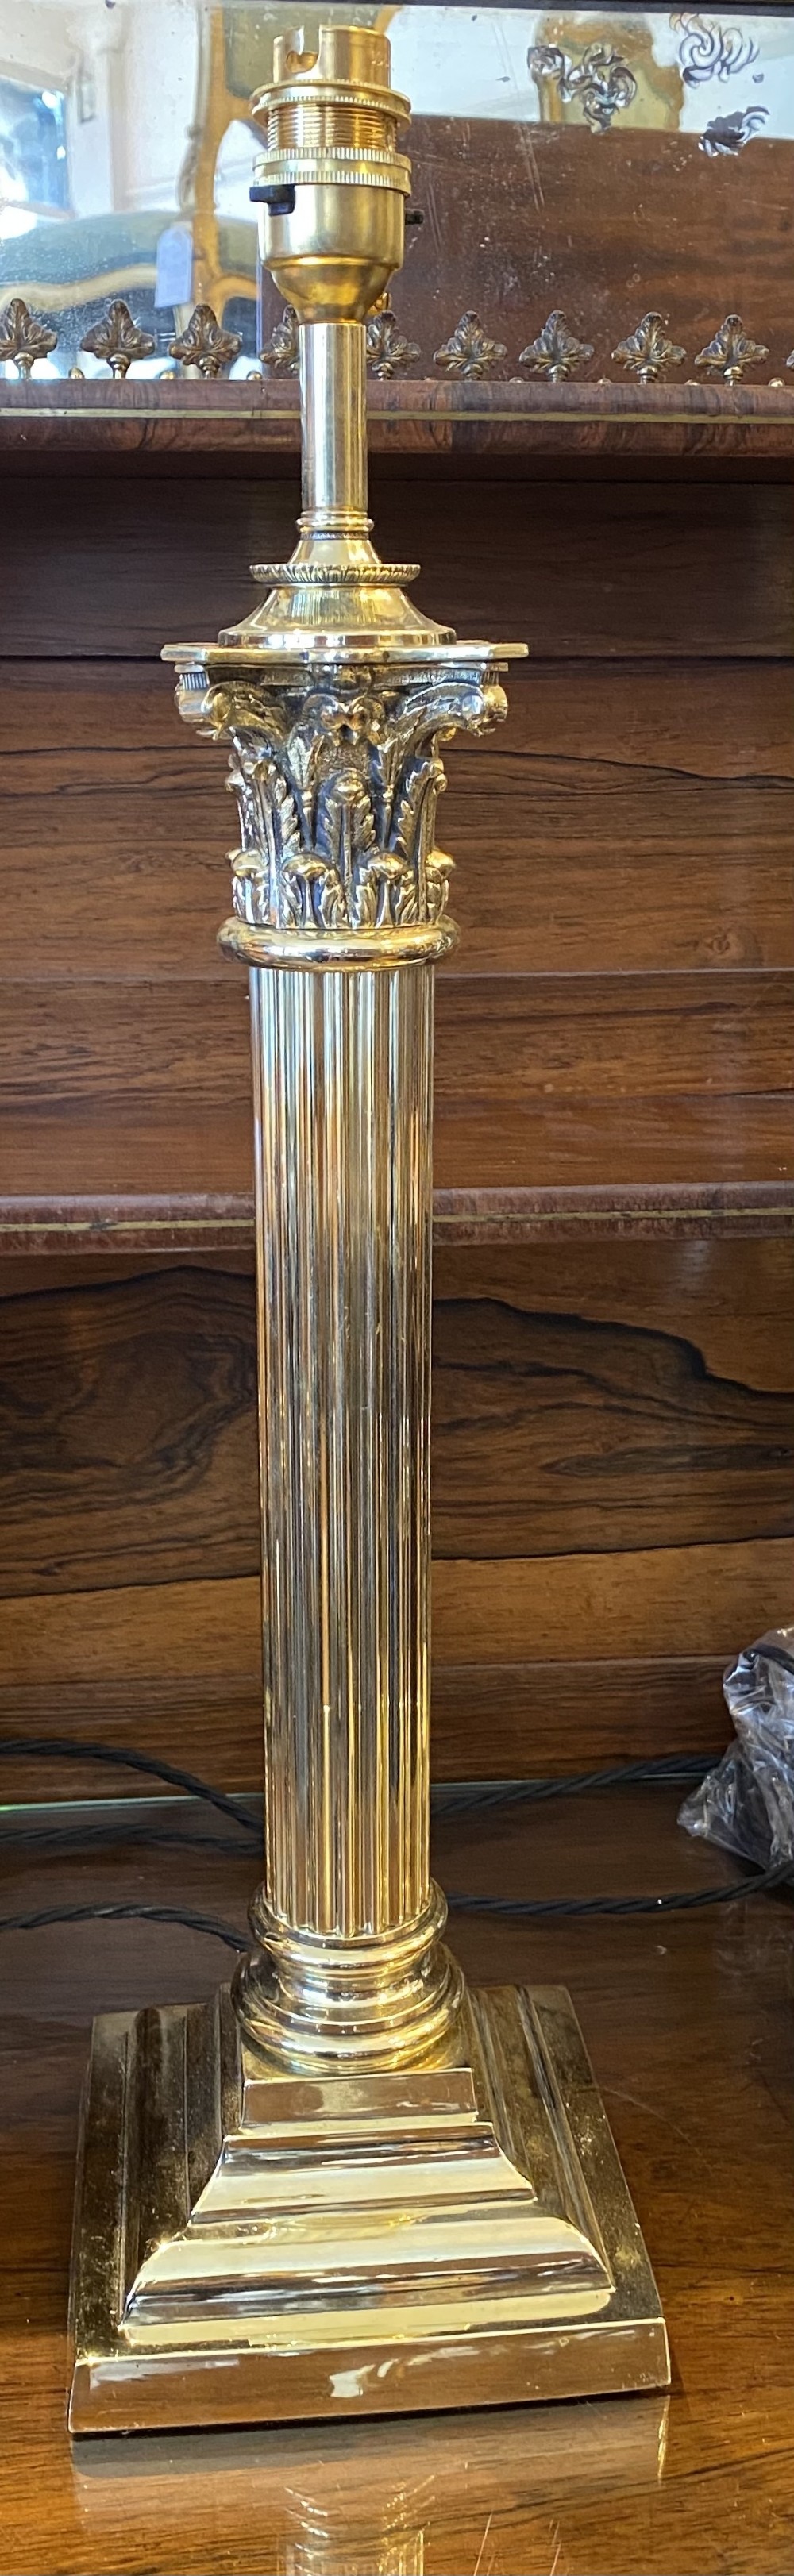 large corinthian column table lamp